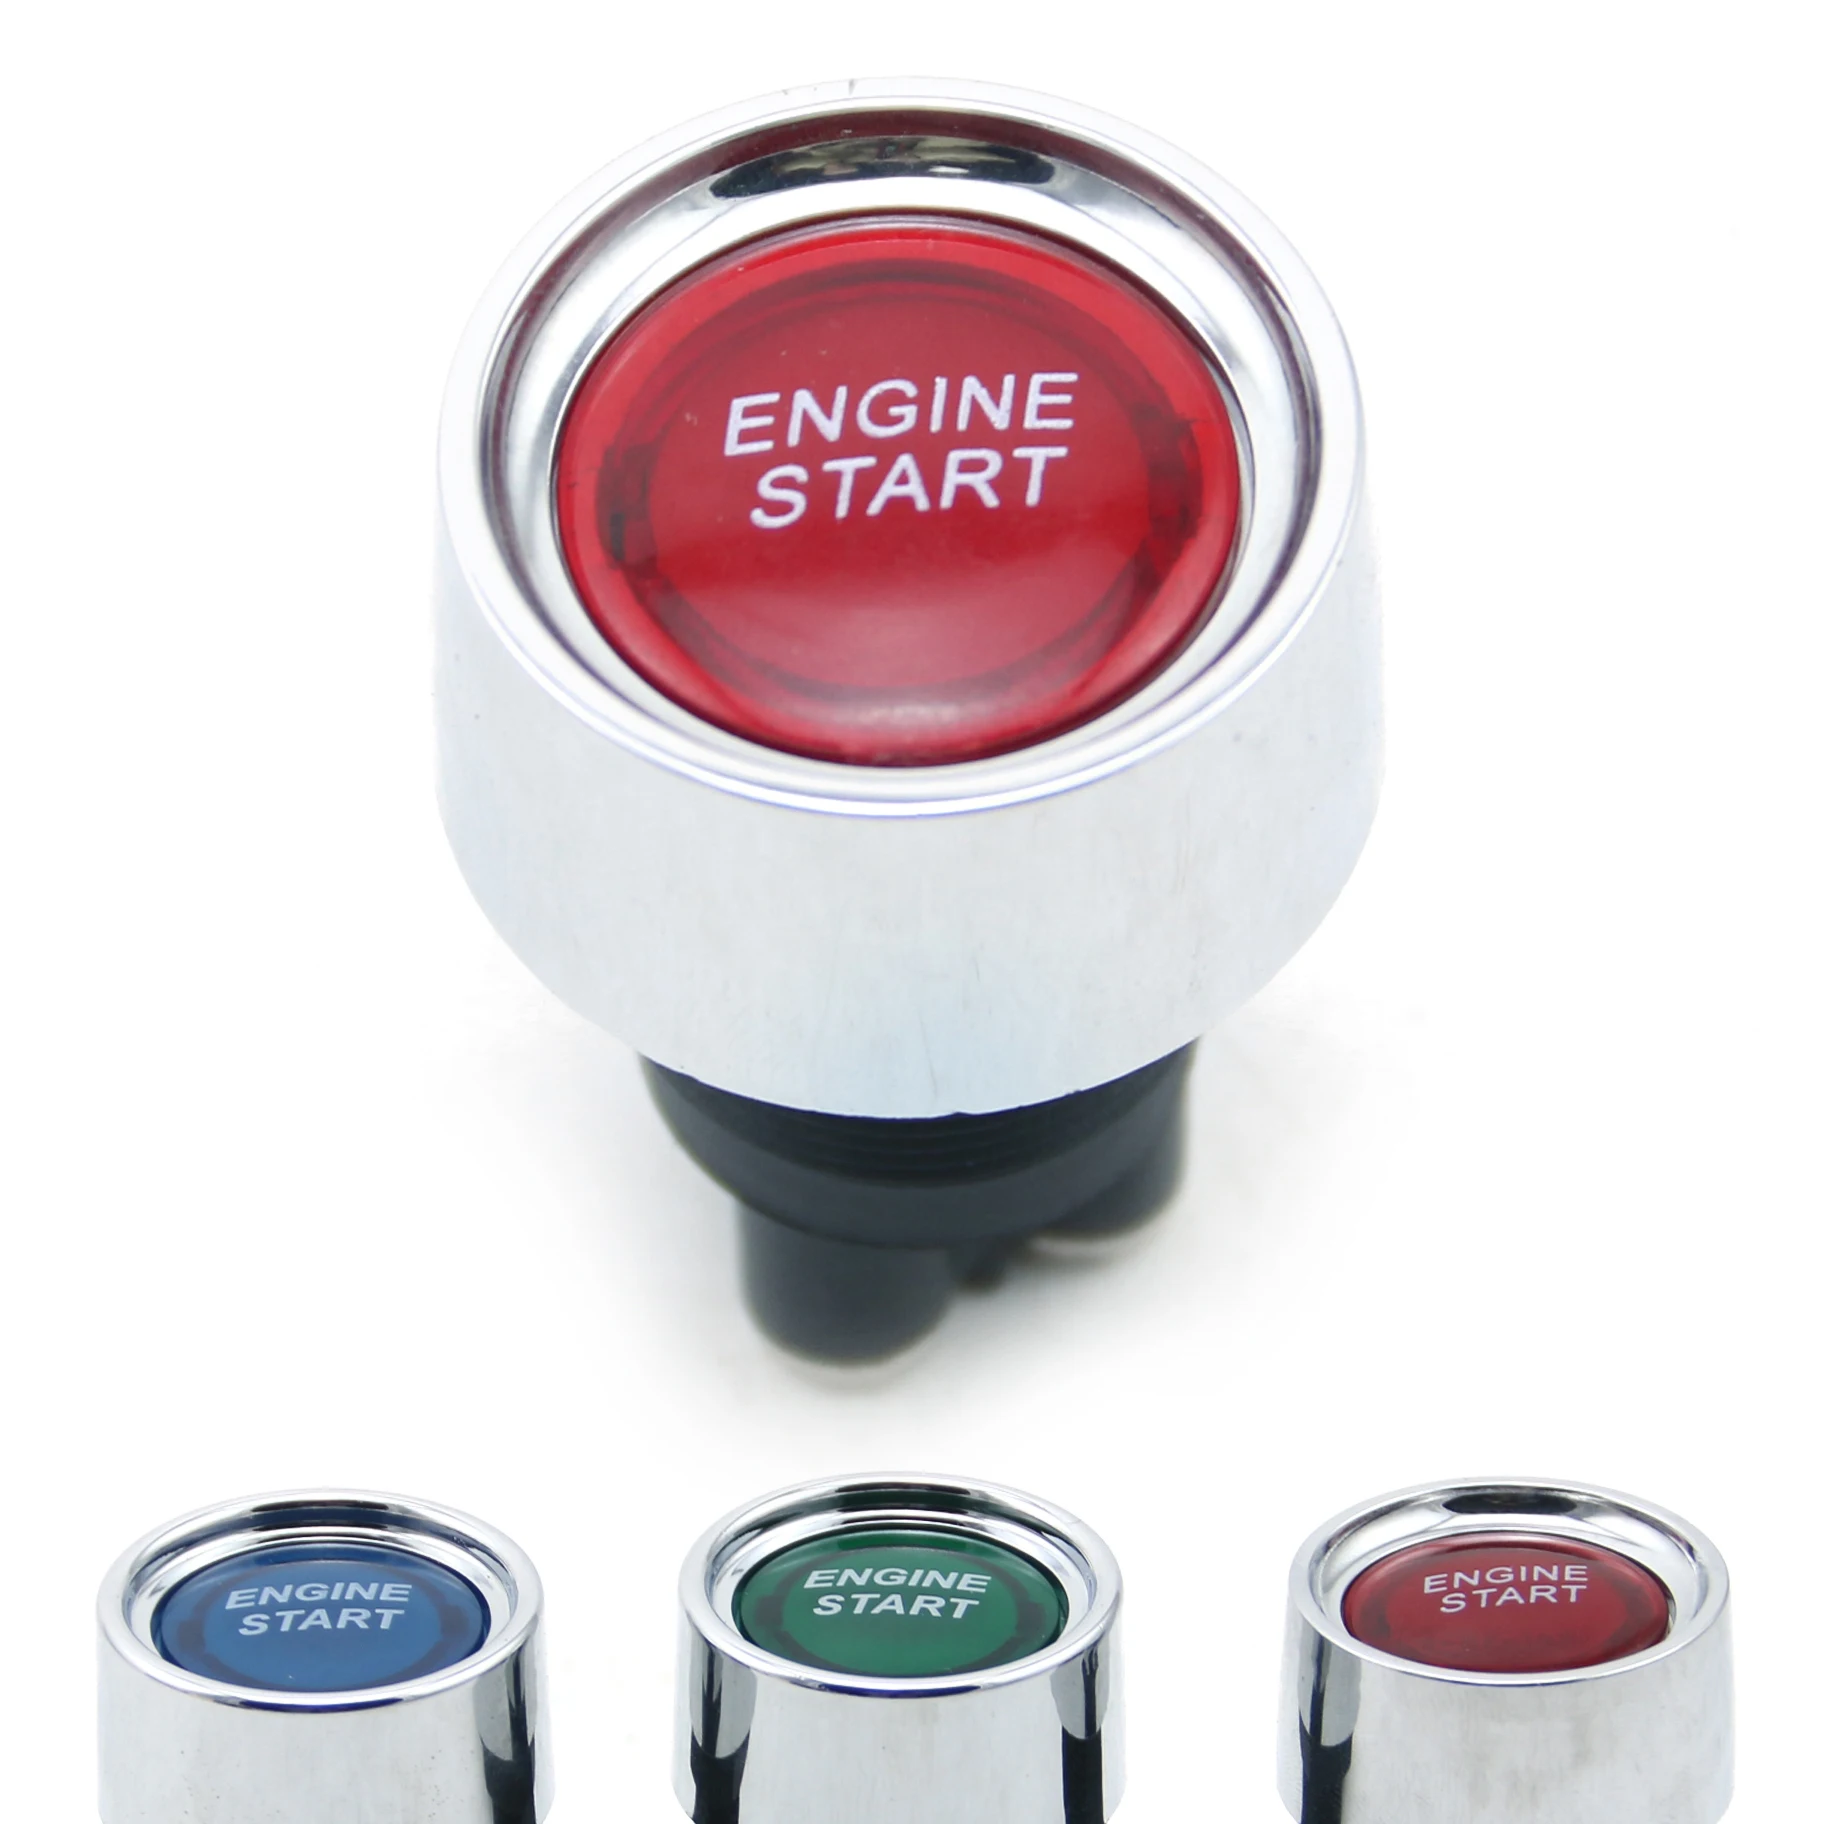 

12v LED Light Motor Car Keyless Engine Starter Ignition Button Key Push Start Button Switch Replacement Engine Start Universal